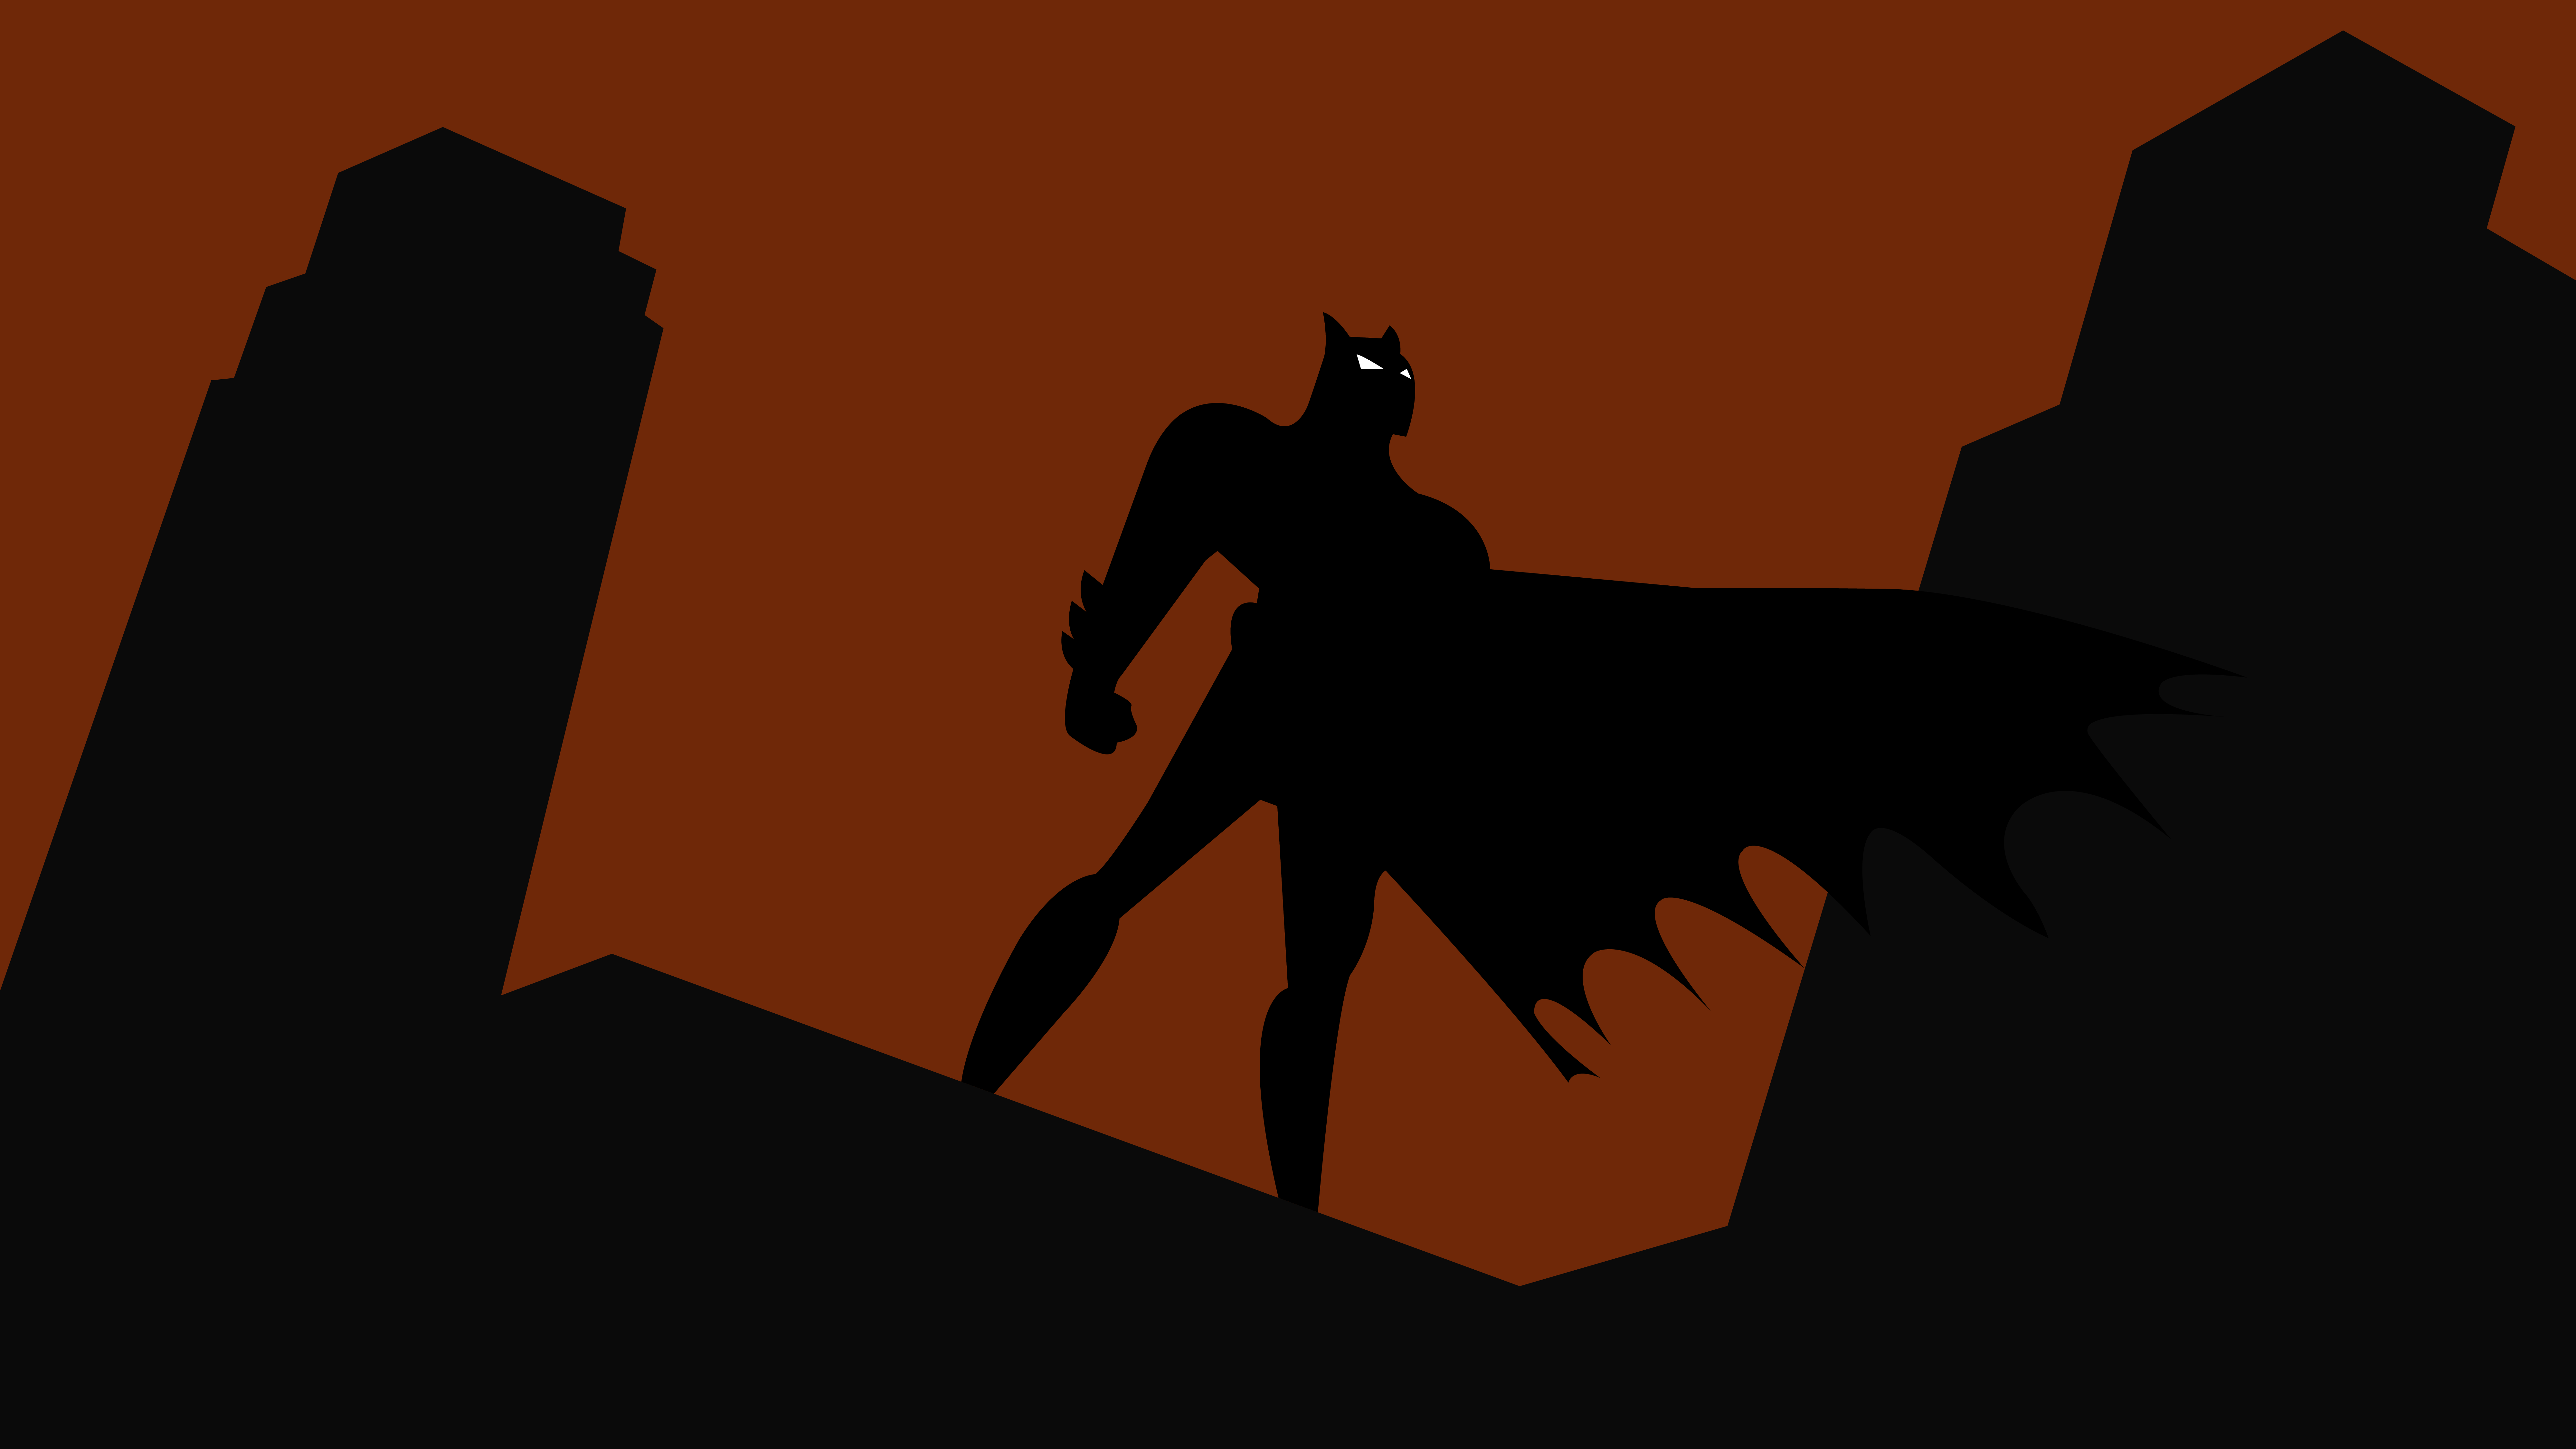 Batman: The Animated Series 8k Ultra HD Wallpaper by yngams